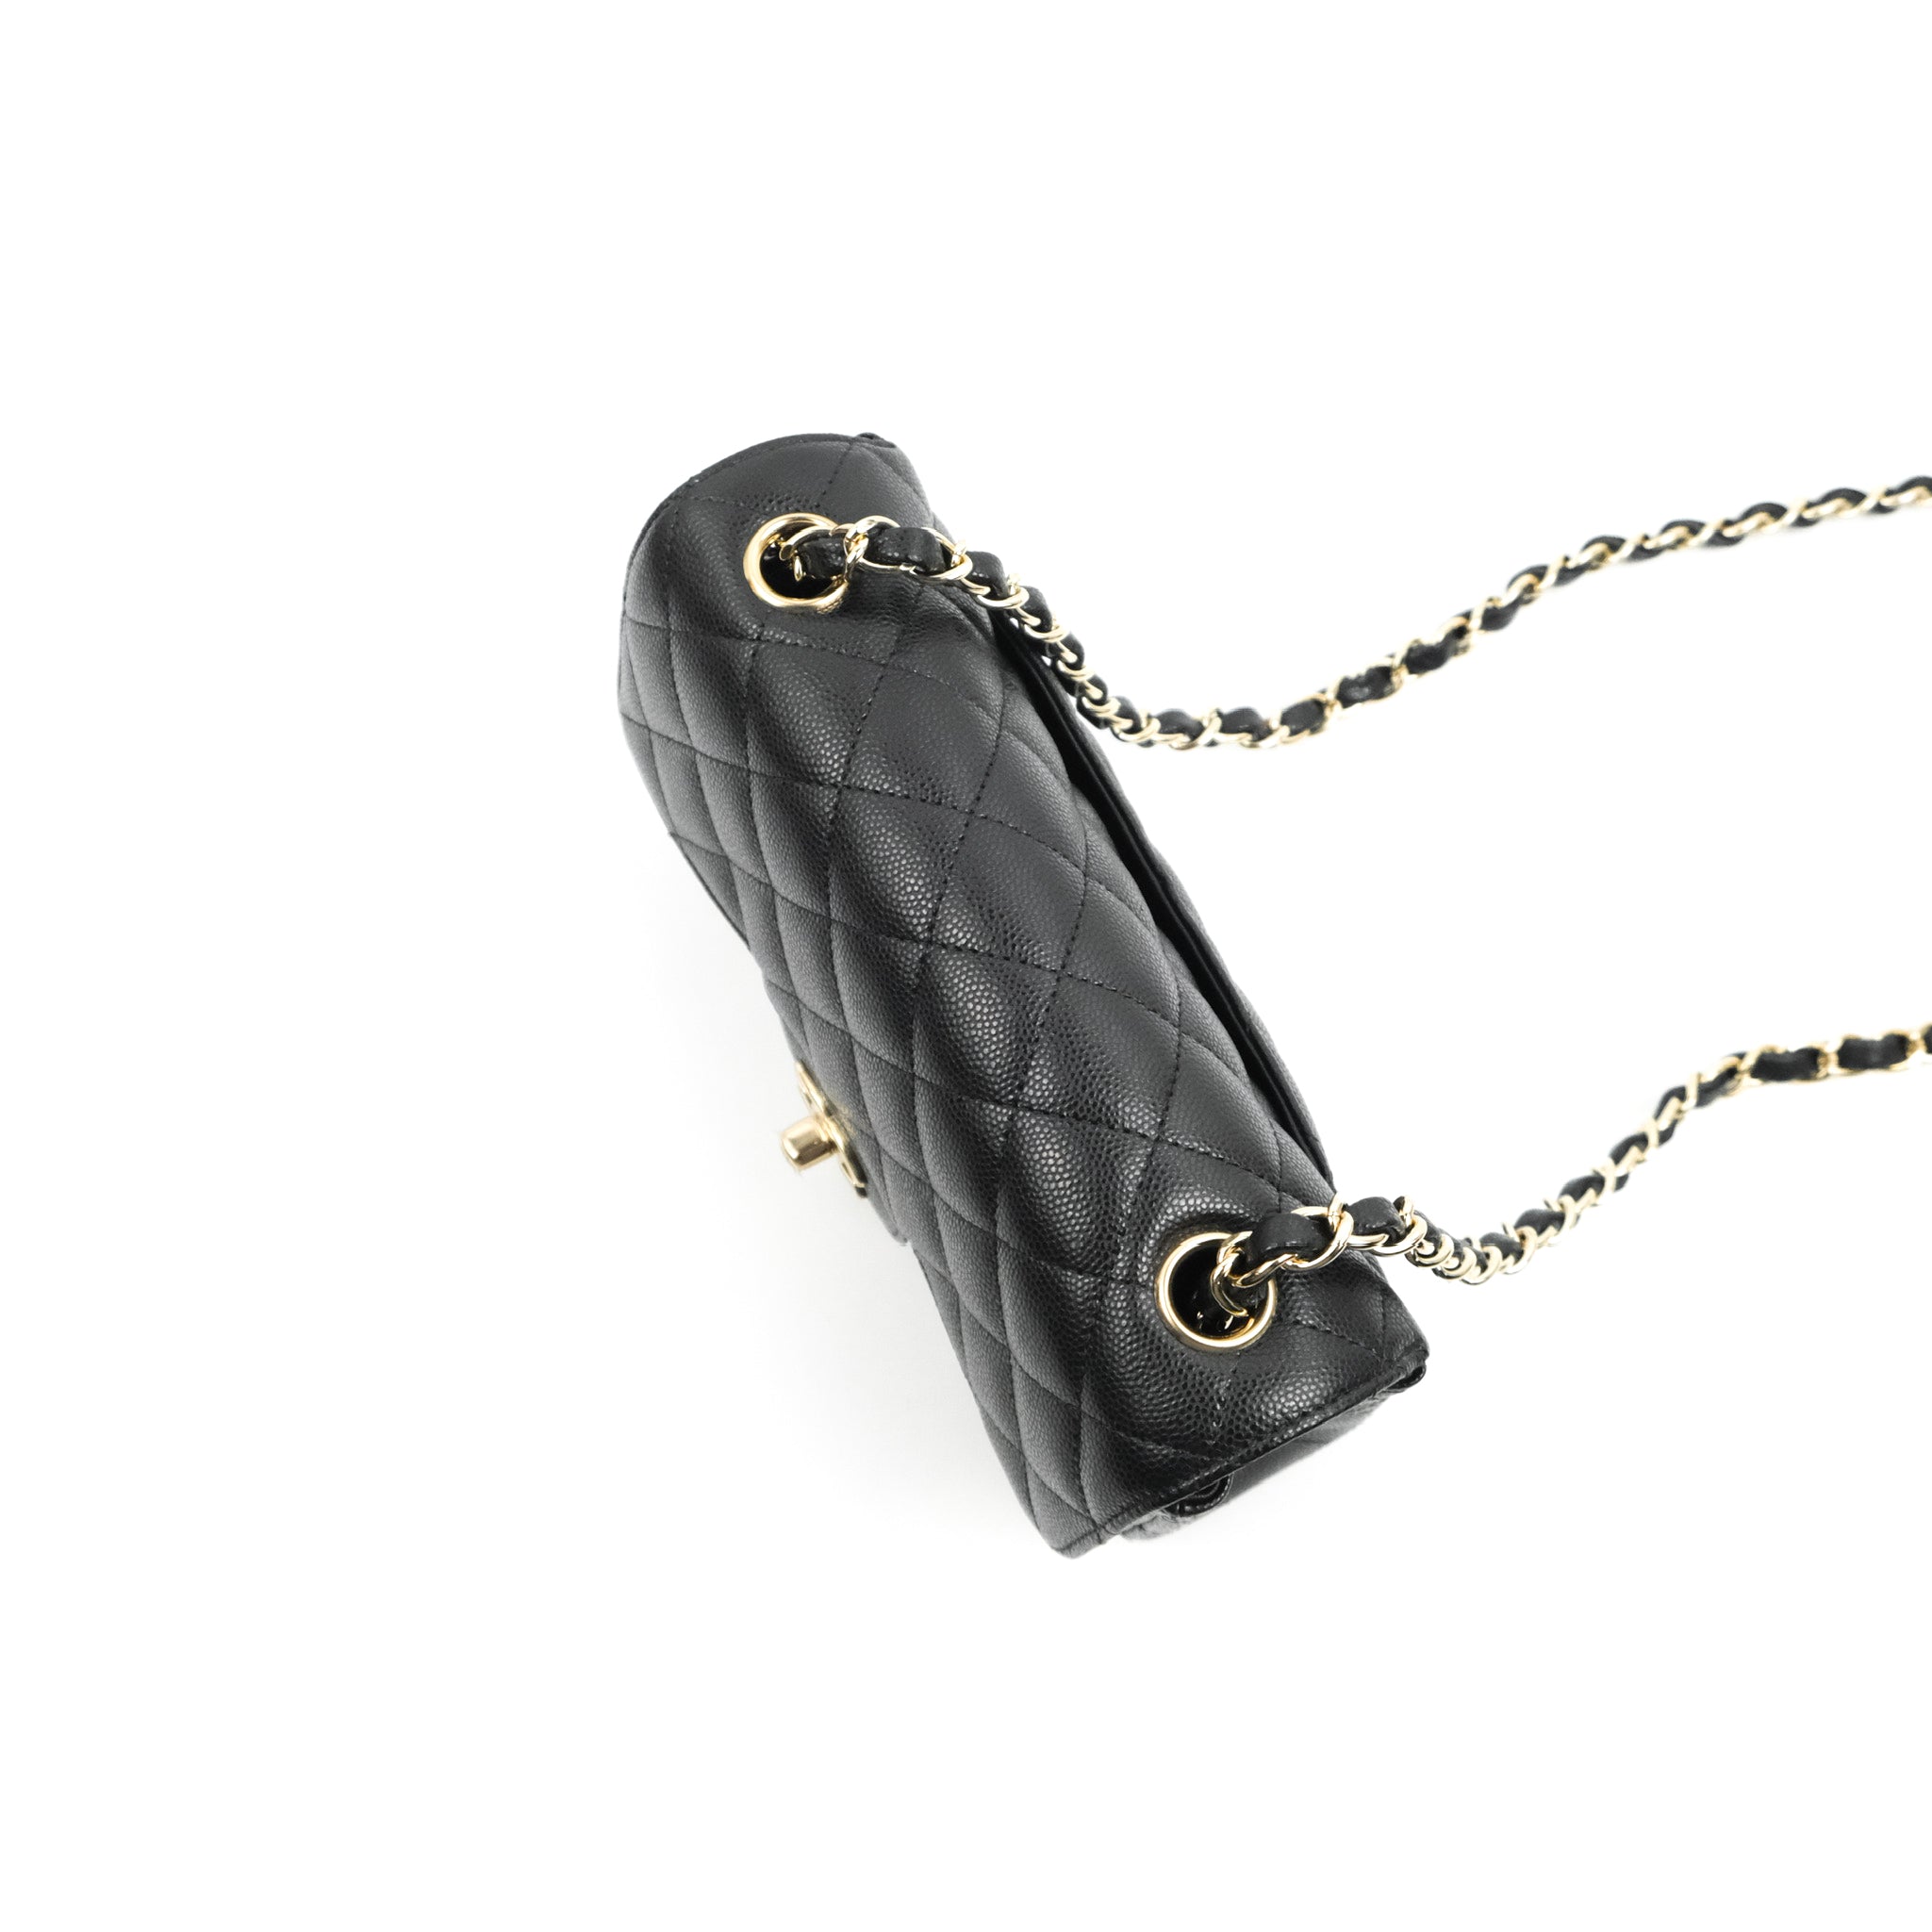 CHANEL Caviar Quilted Mini Square Flap Bag Black, FASHIONPHILE